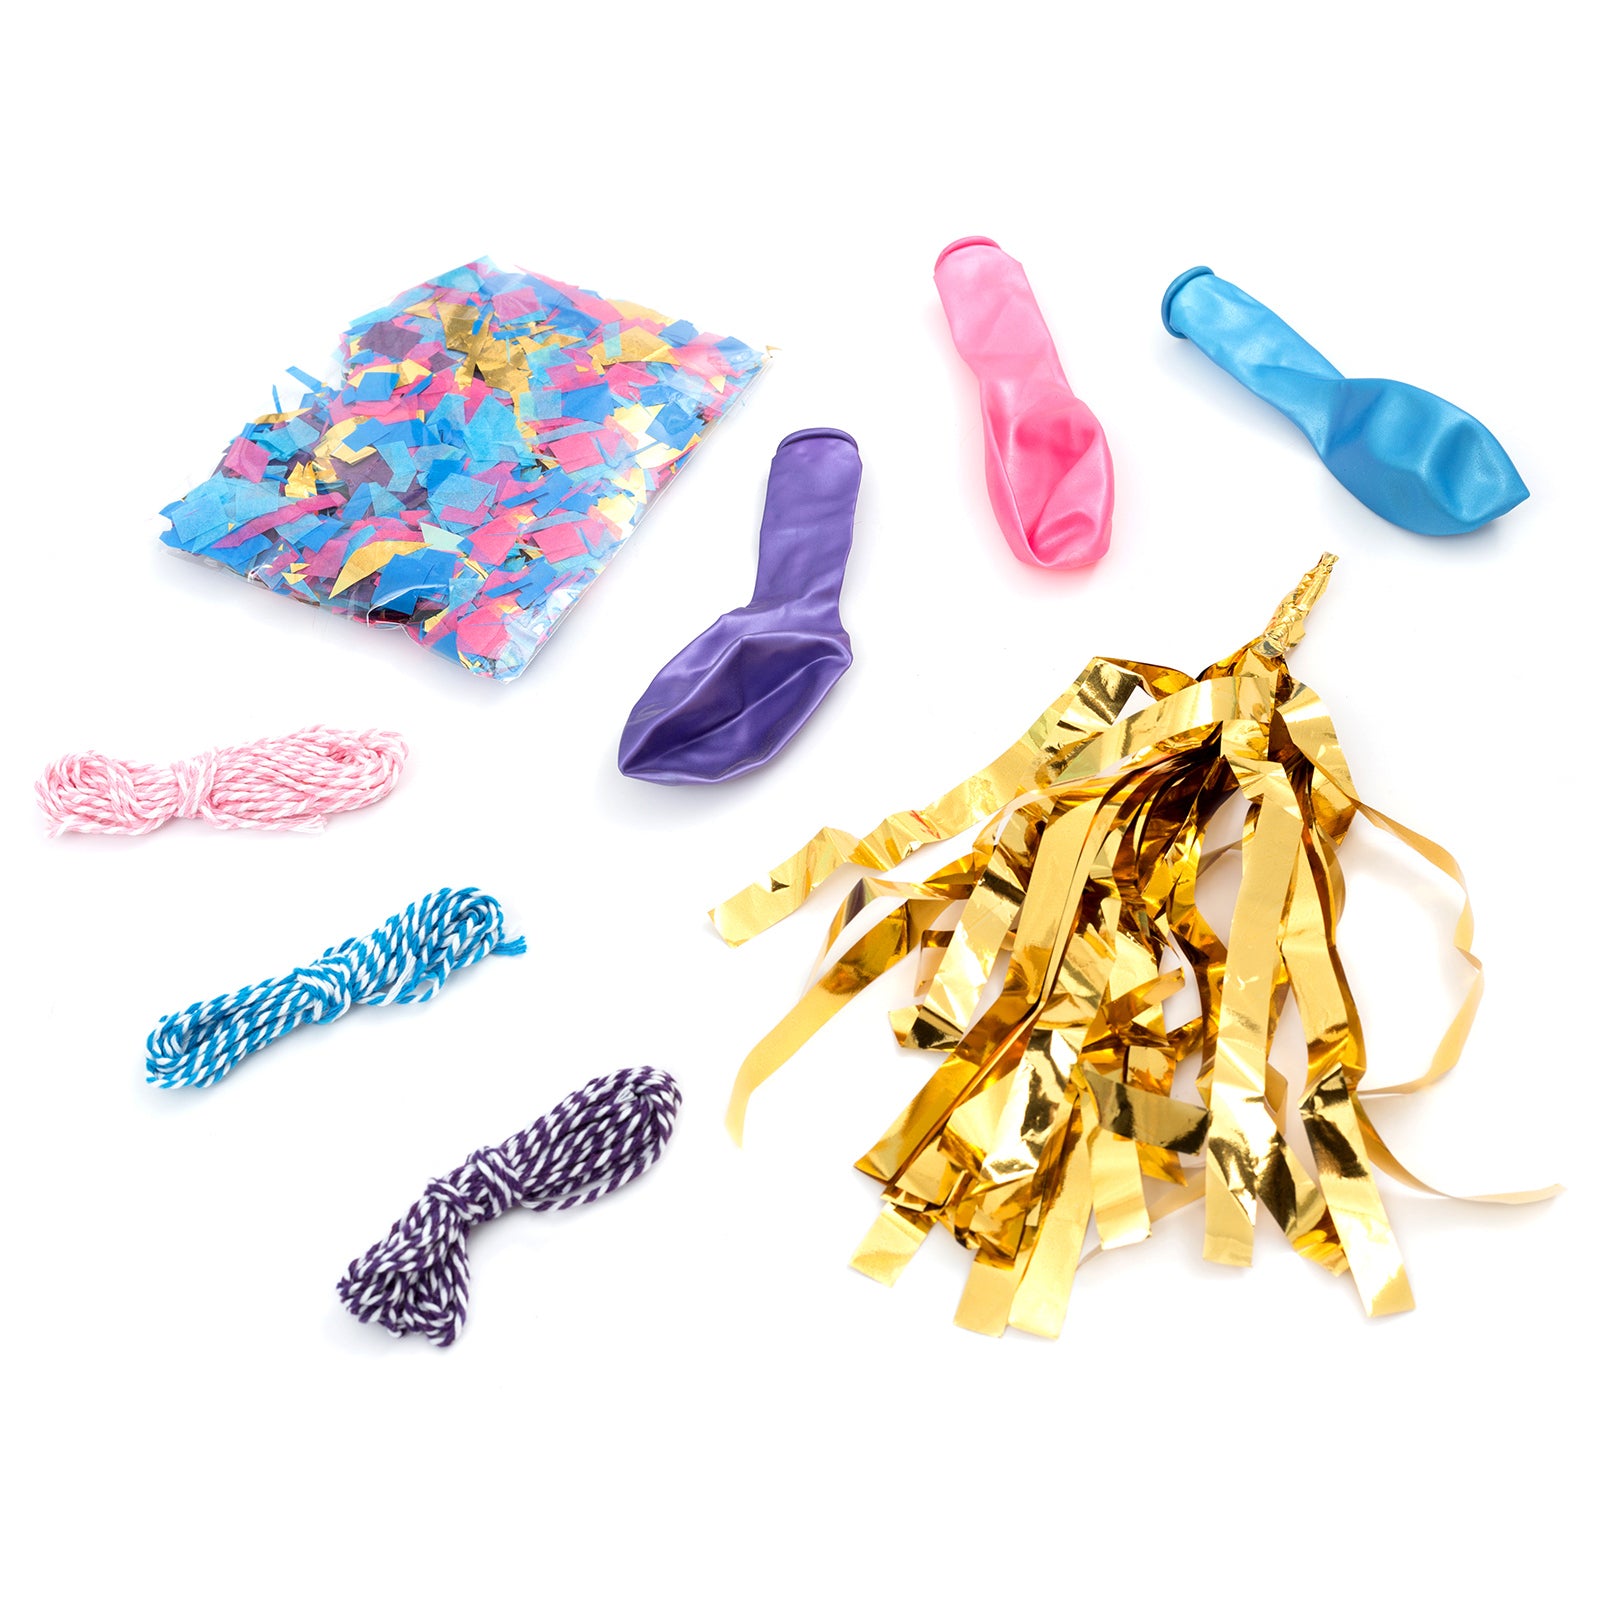 Unicorn Confetti Balloon Kit | www.sprinklebeesweet.com